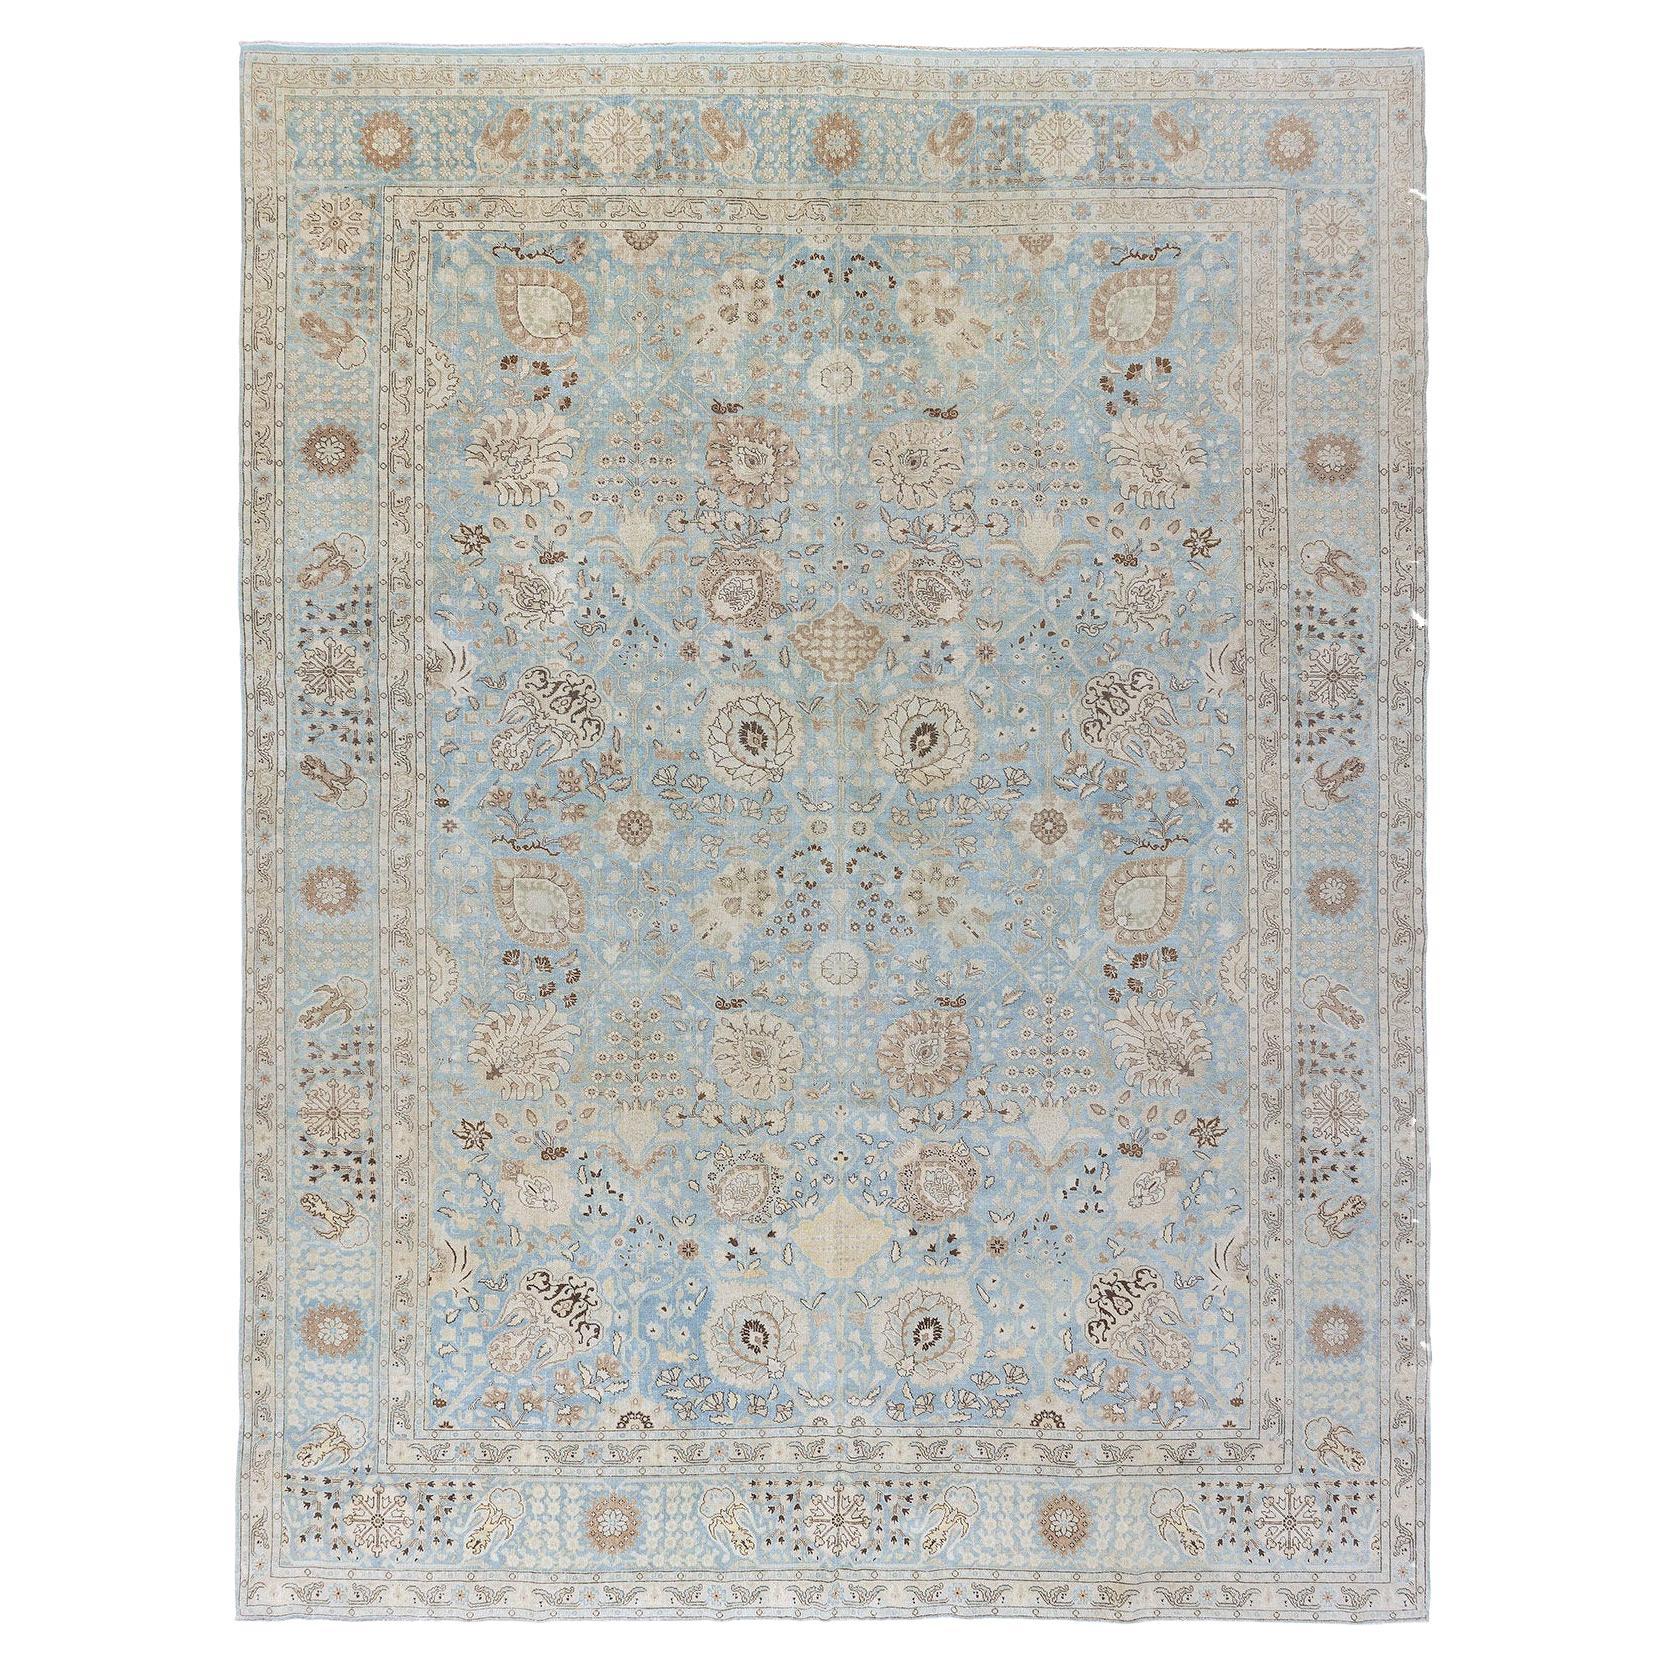 Ancien tapis persan ancien bleu clair de Tabriz